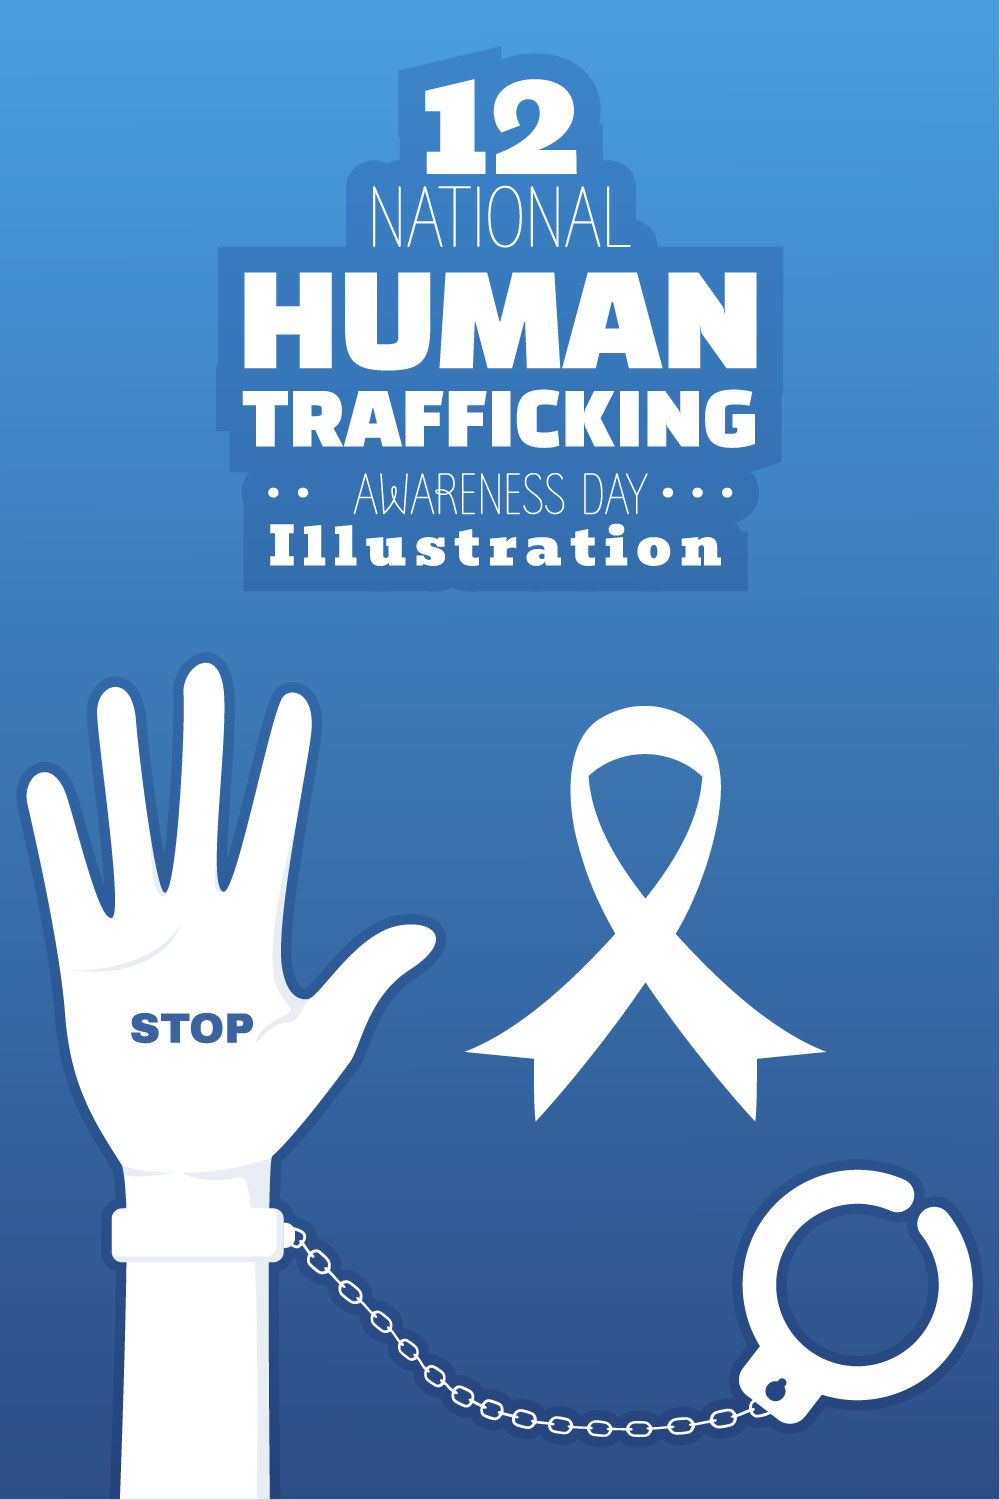 12 Human Trafficking Awareness Day Illustration - pinterest image preview.